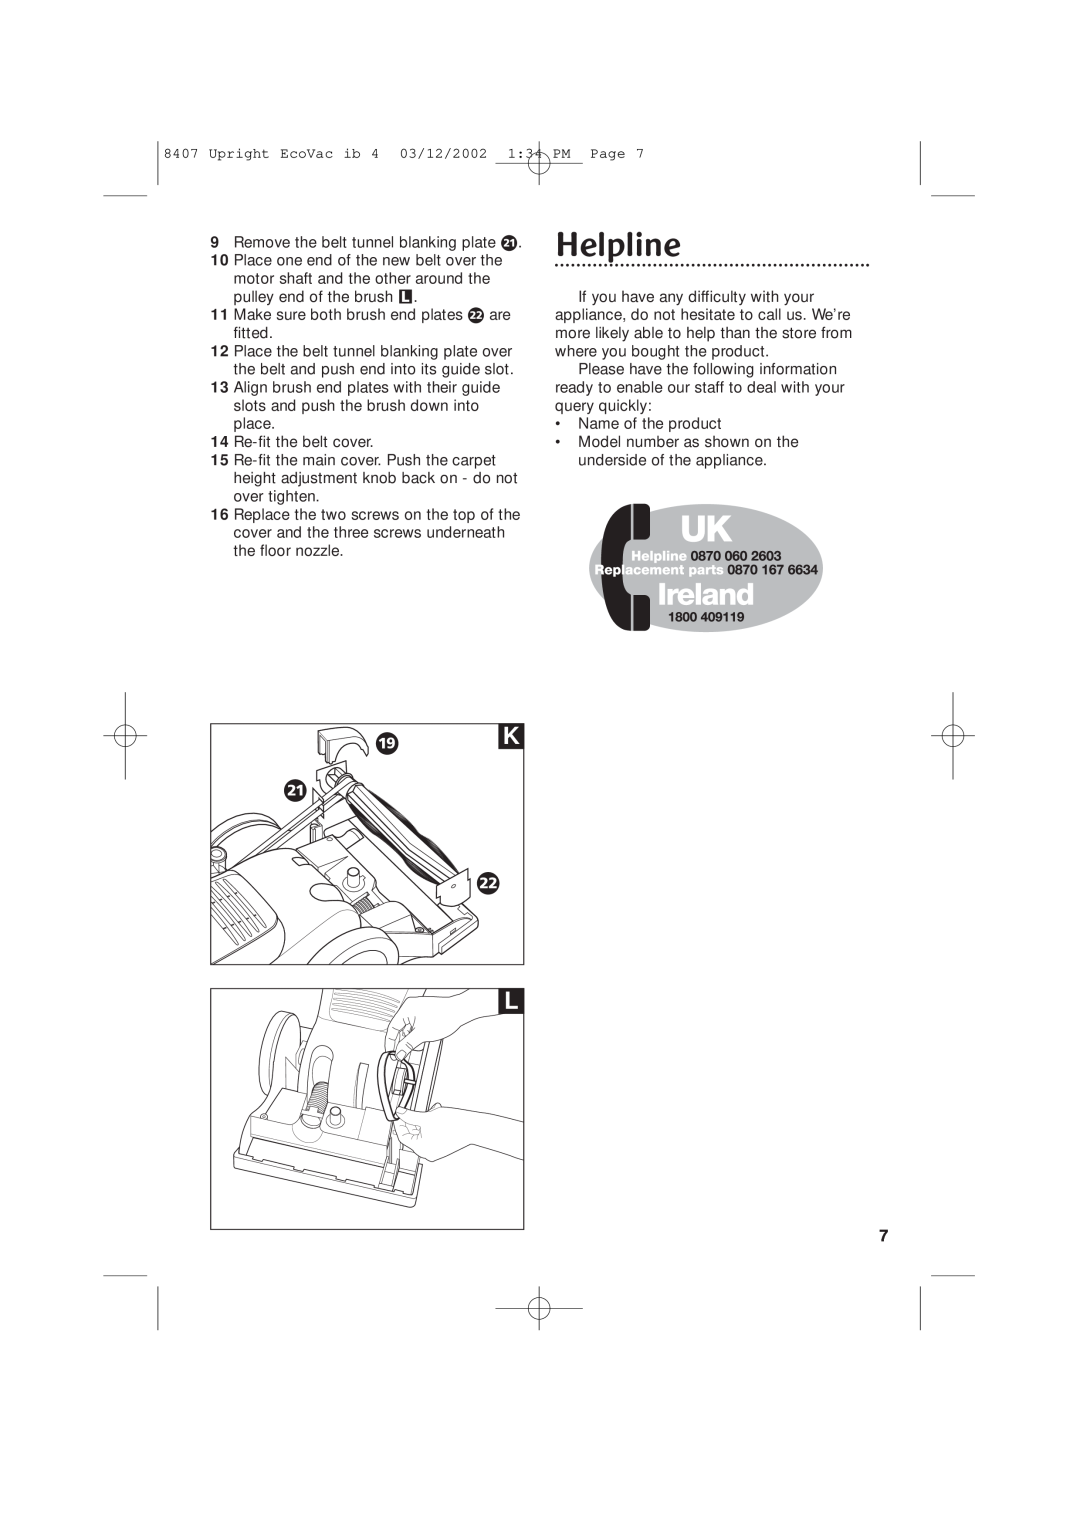 Morphy Richards Ecovac vacuum cleaner manual Helpline, order line 